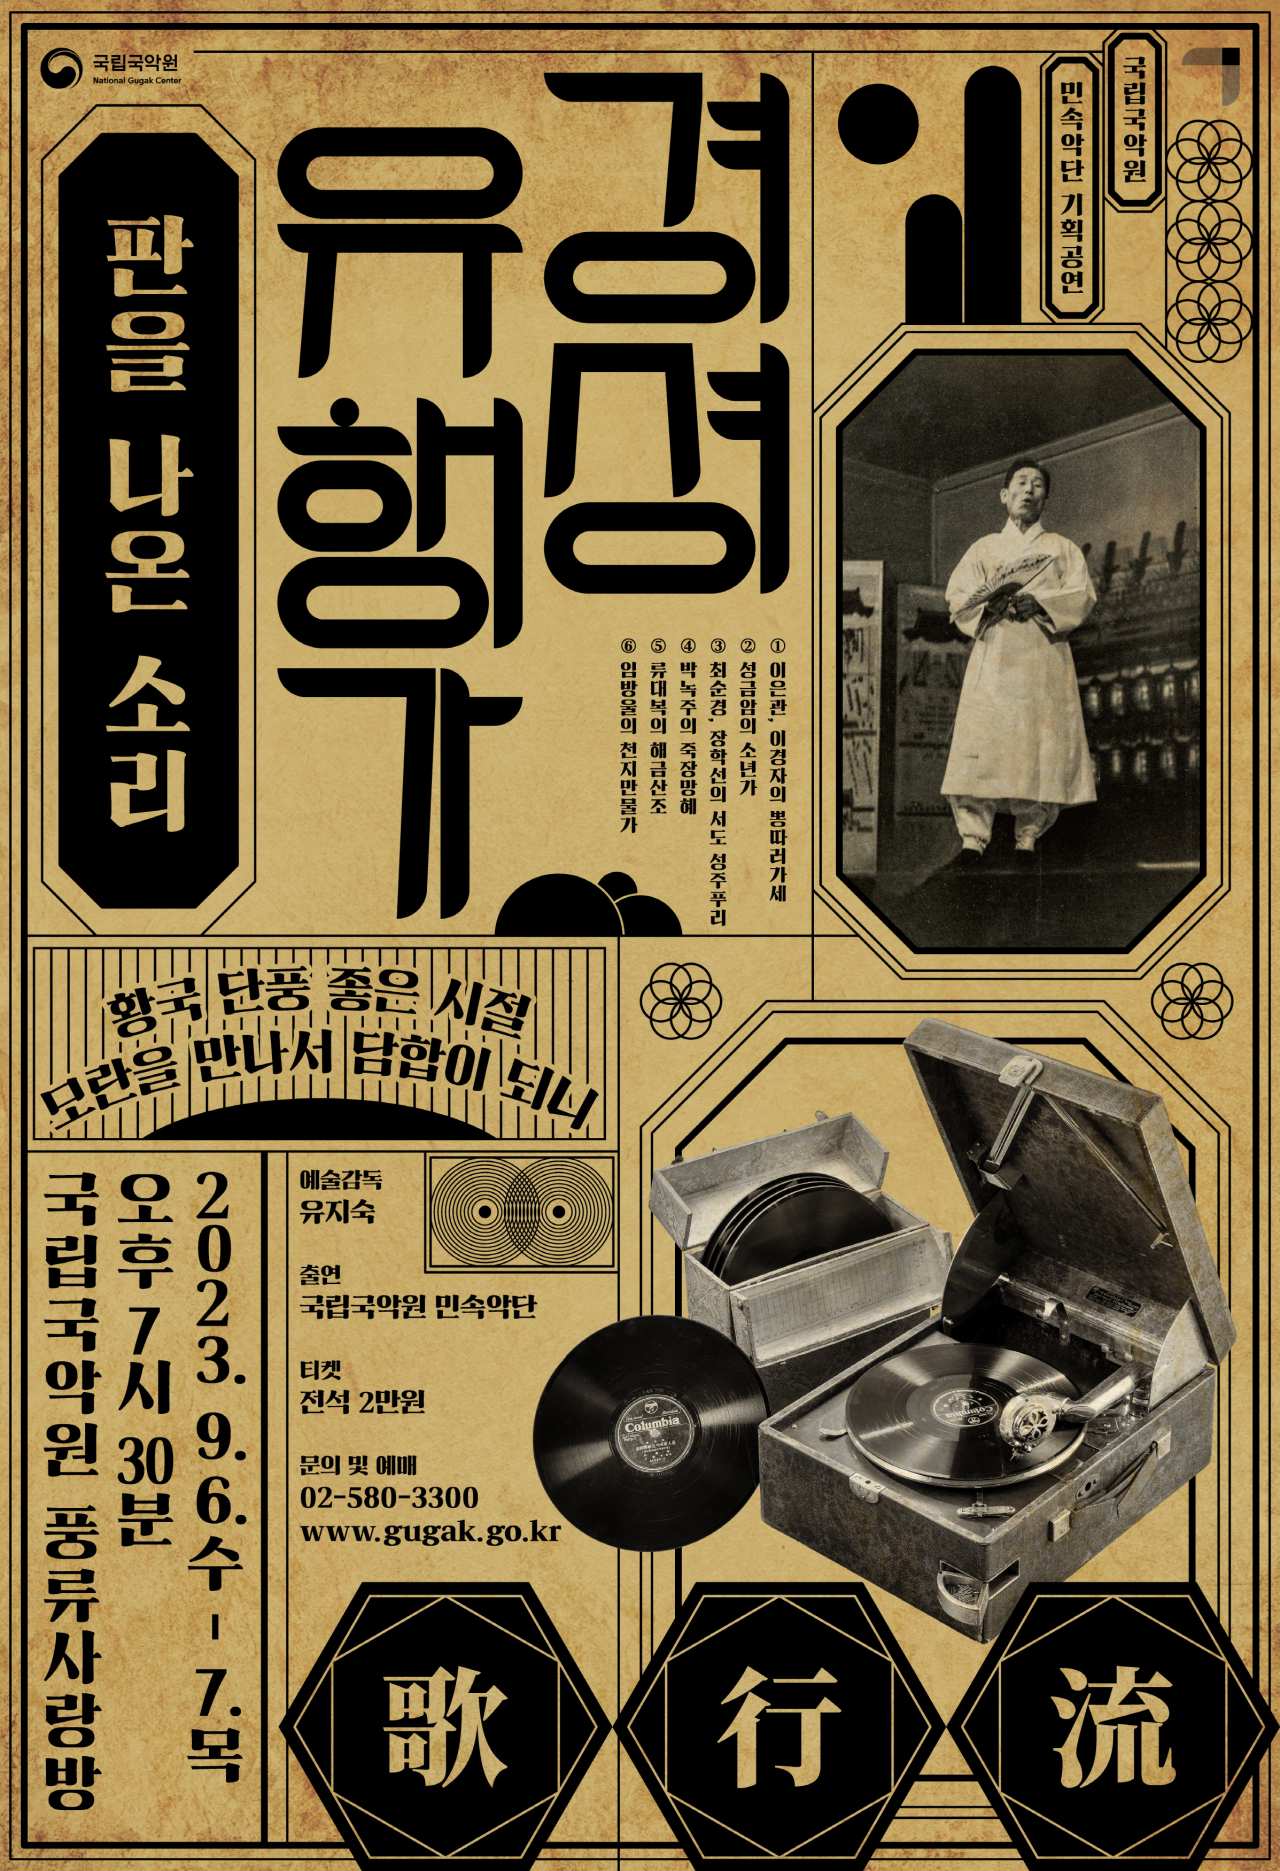 Poster for “Gyeongseong Hit Songs” (National Gugak Center)